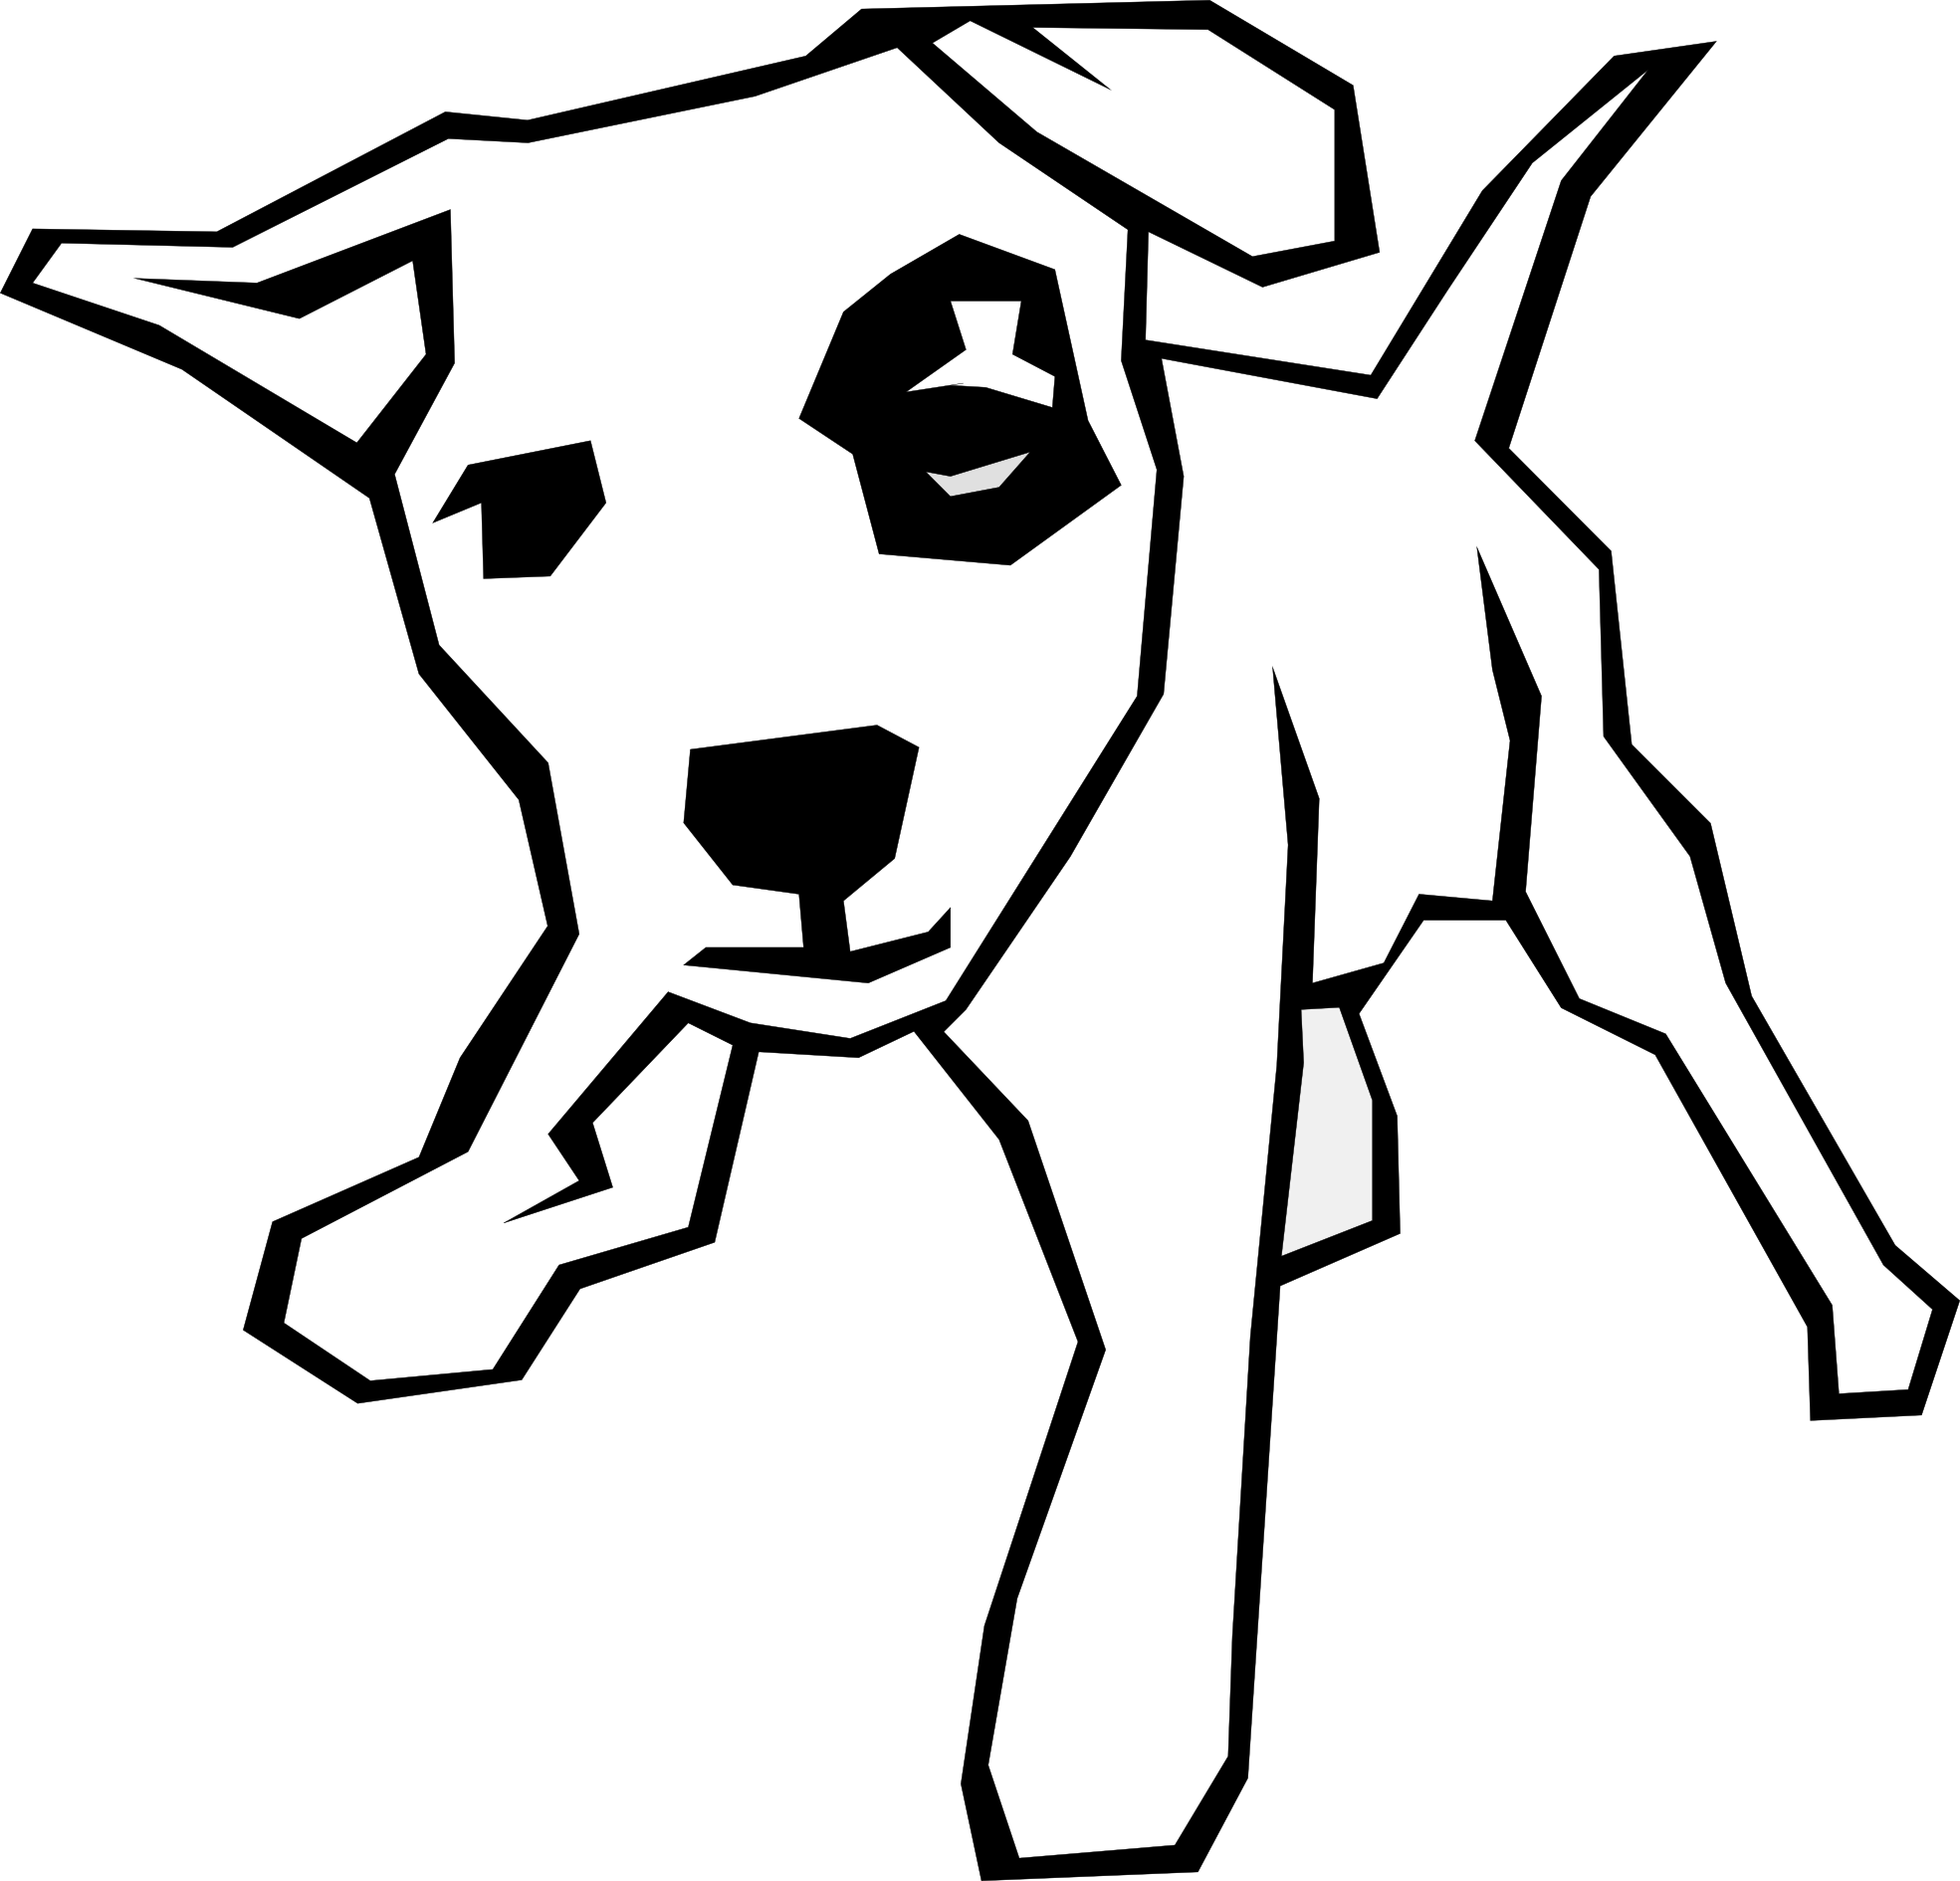 Clip Art: Dog 3 Drawn with Strai 1 Black White ...